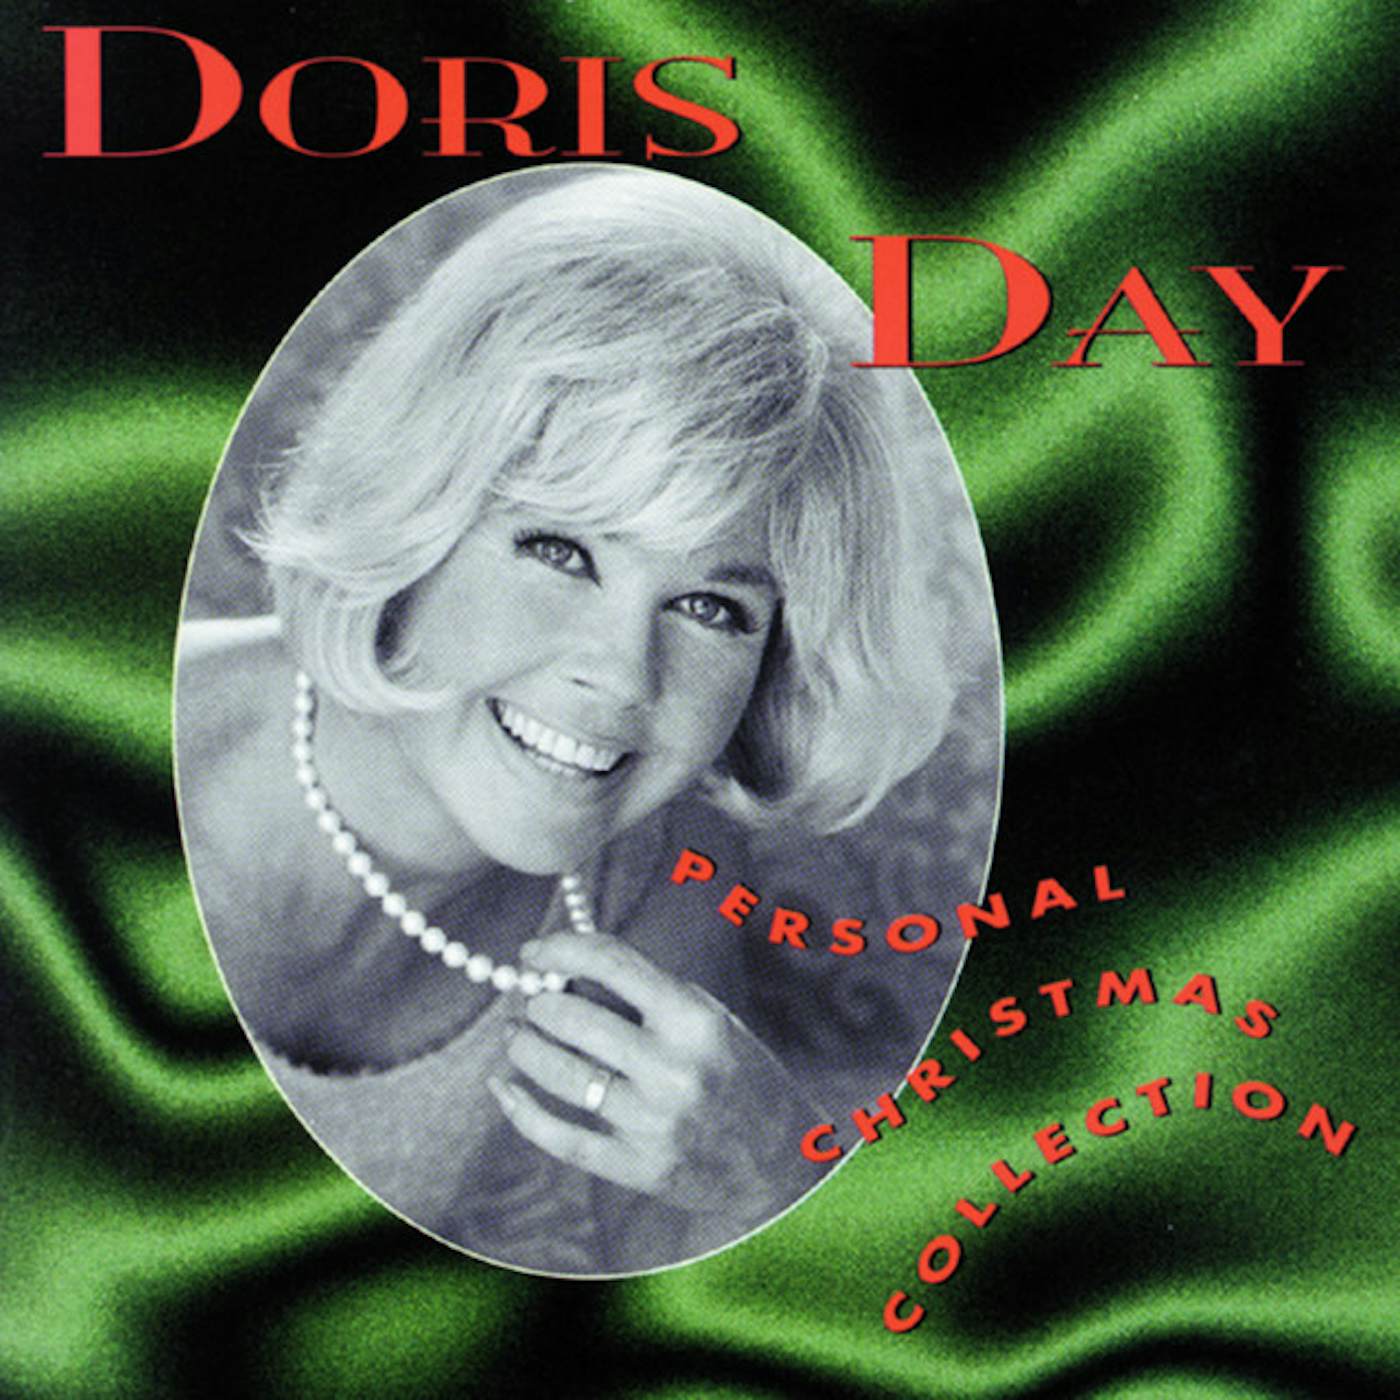 Doris Day PERSONAL CHRISTMAS COLLECTION CD